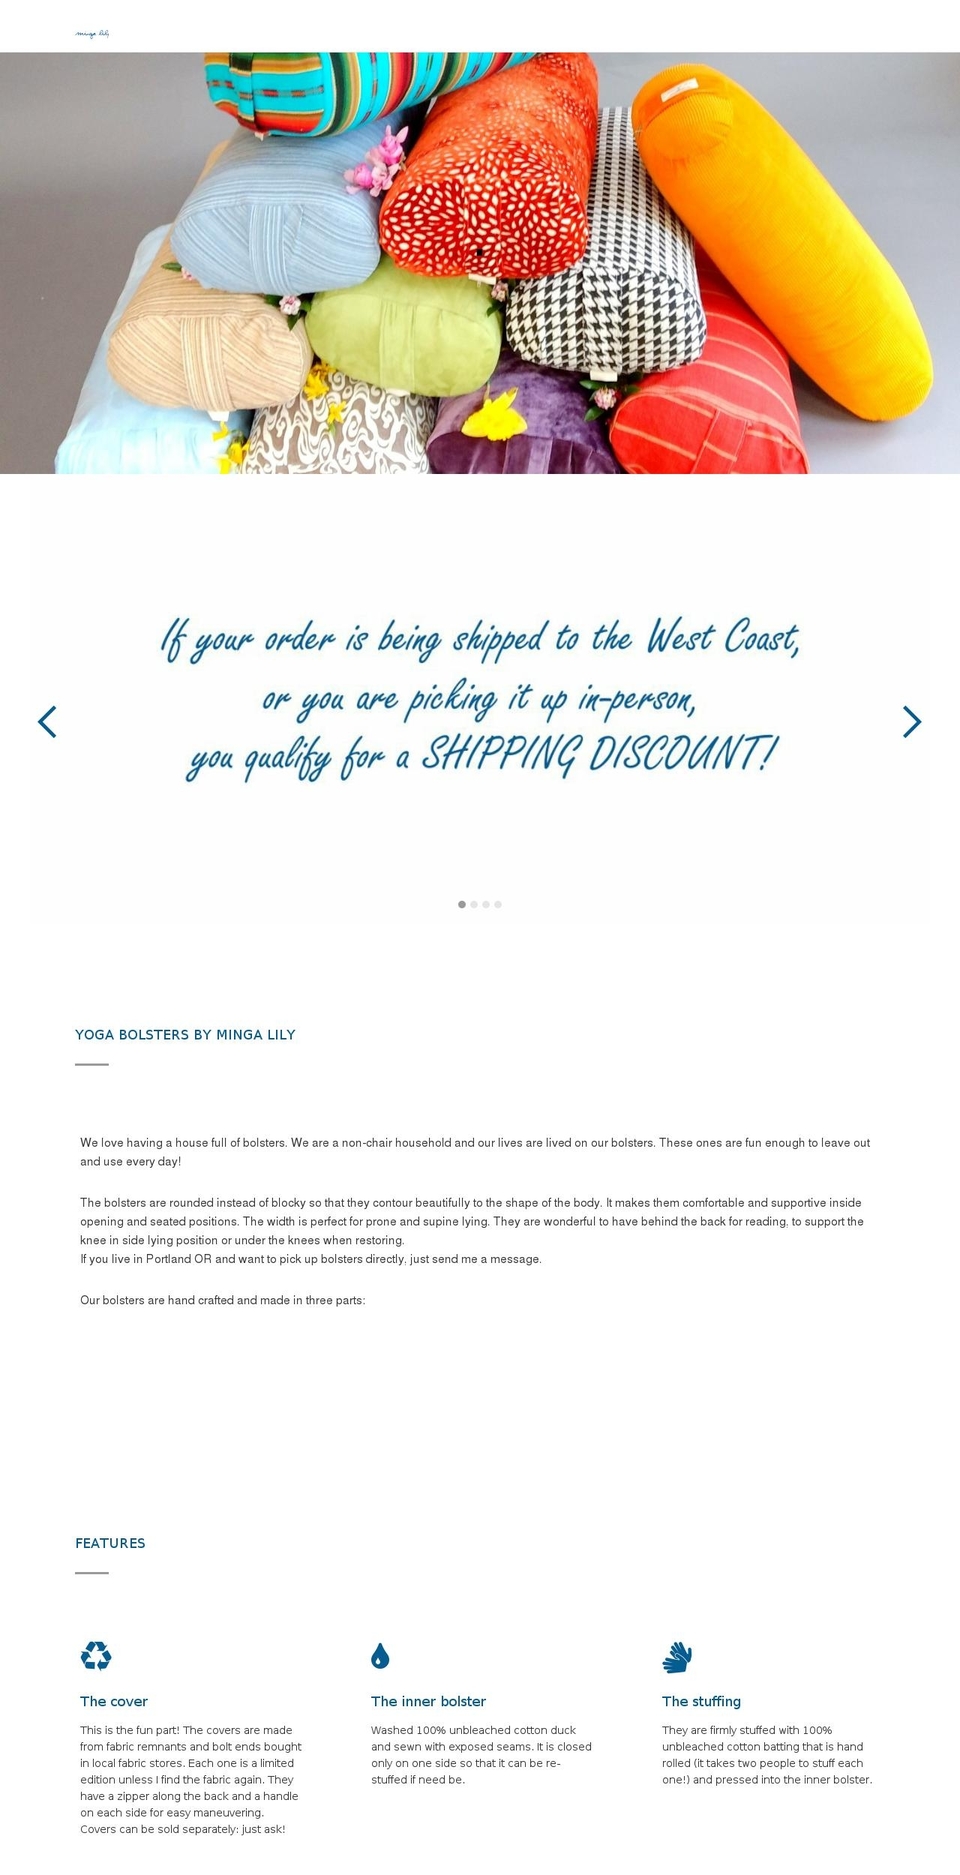 November Shopify theme site example mingalily.com